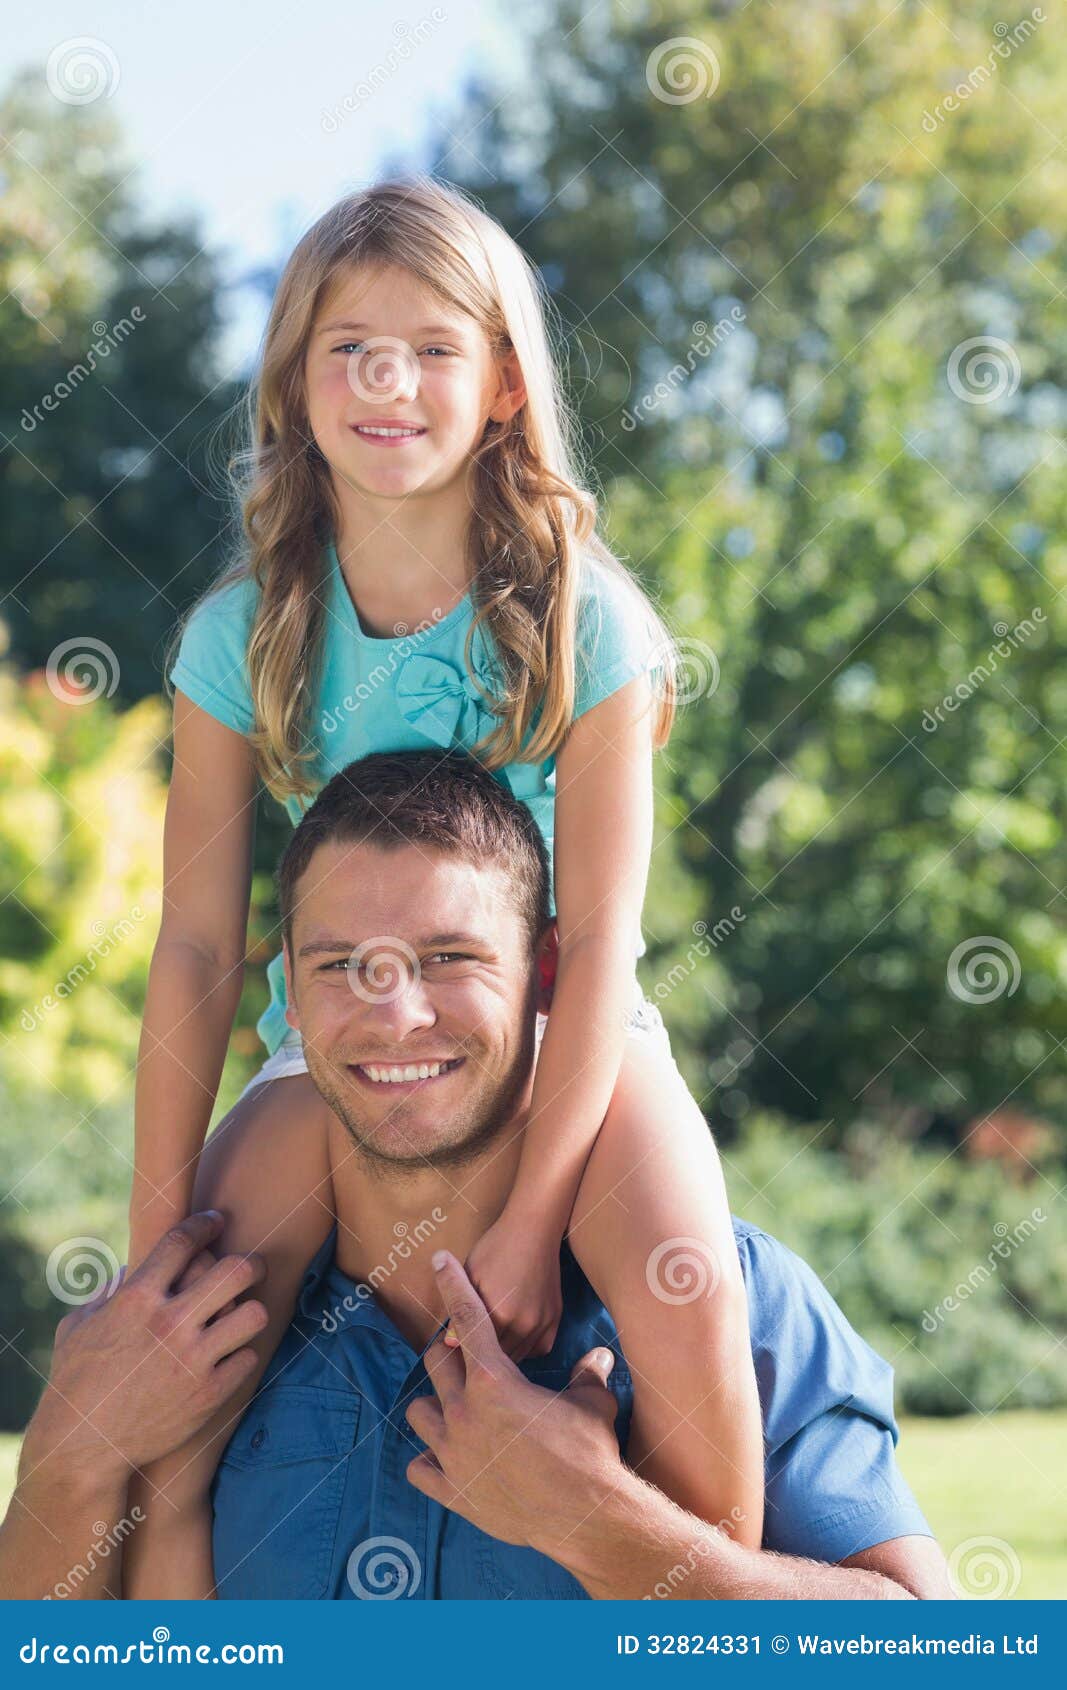 Young daughter daddy. Дочь на плечах у отца. Девочка на руках отца. Девочка сидит на плечах. Девочка на плечах у папы.